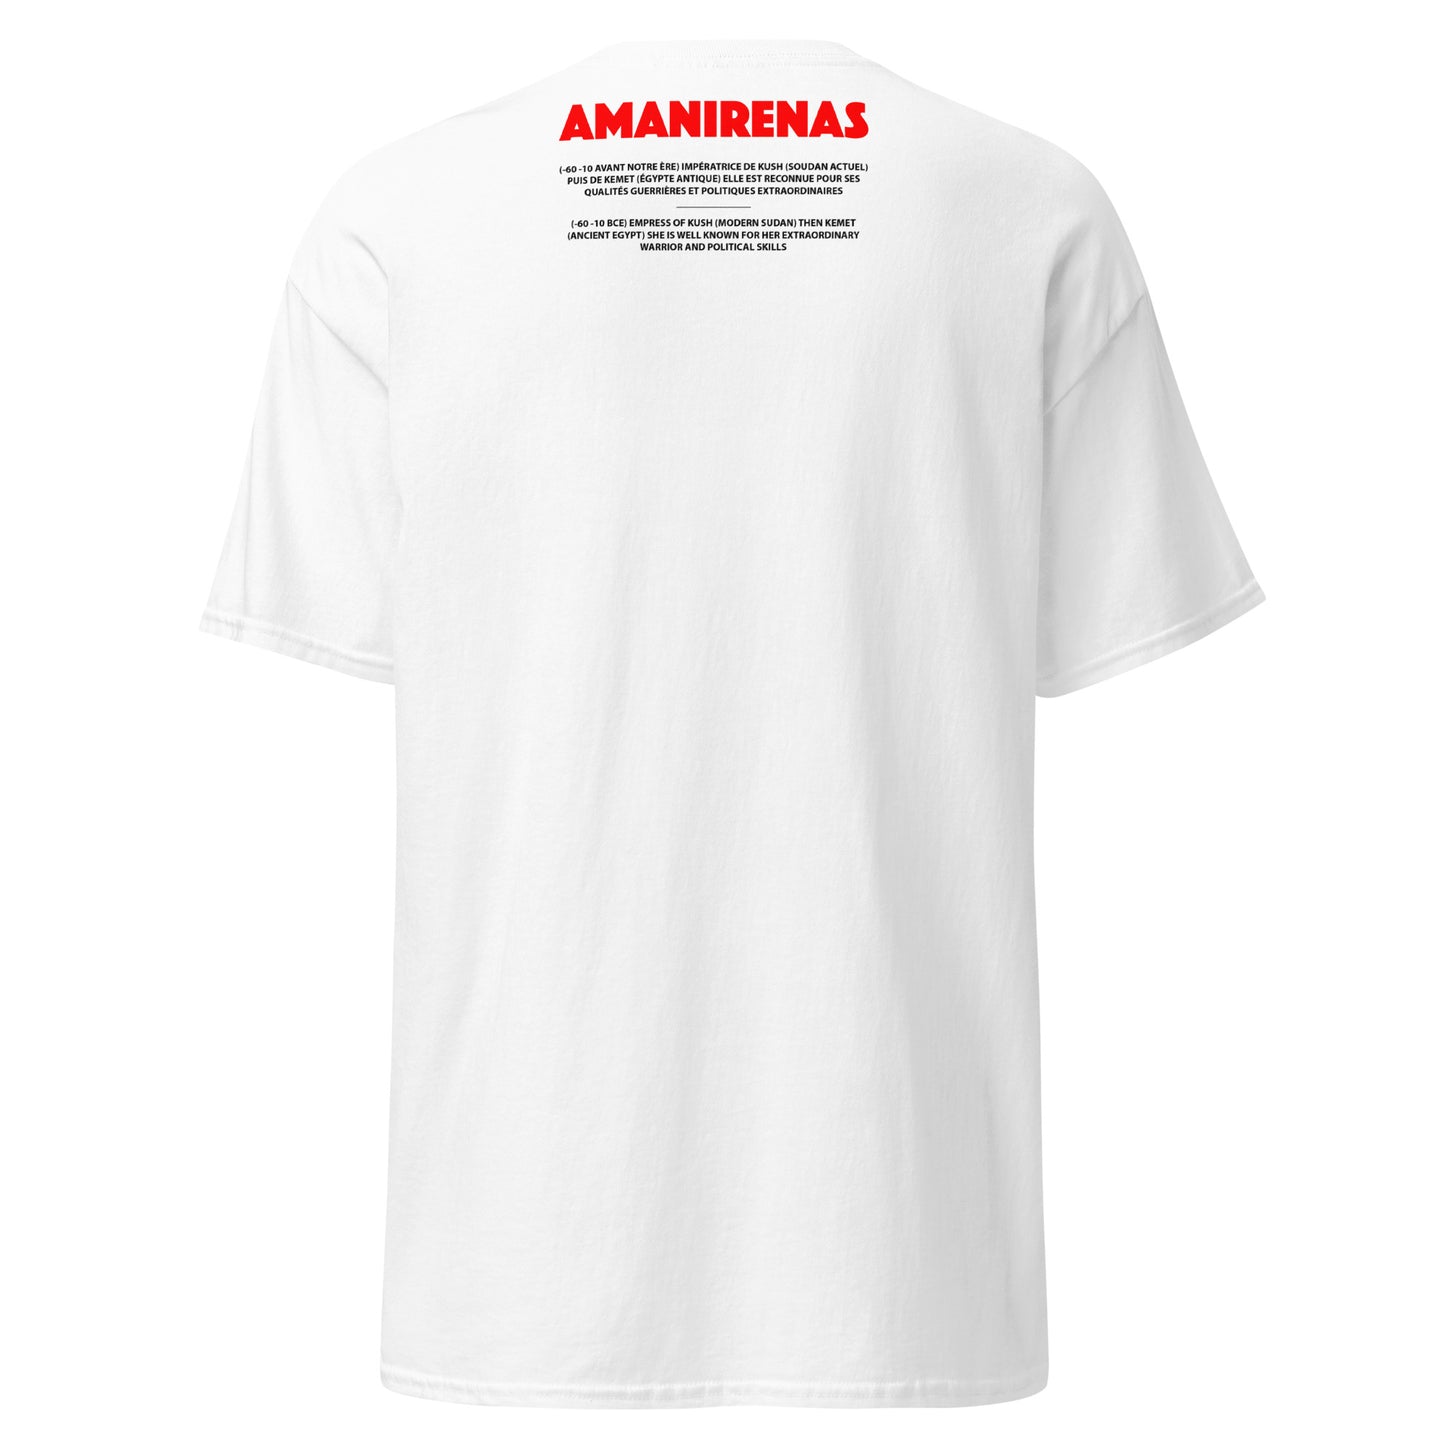 AMANIRENAS (T-Shirt Cadre)